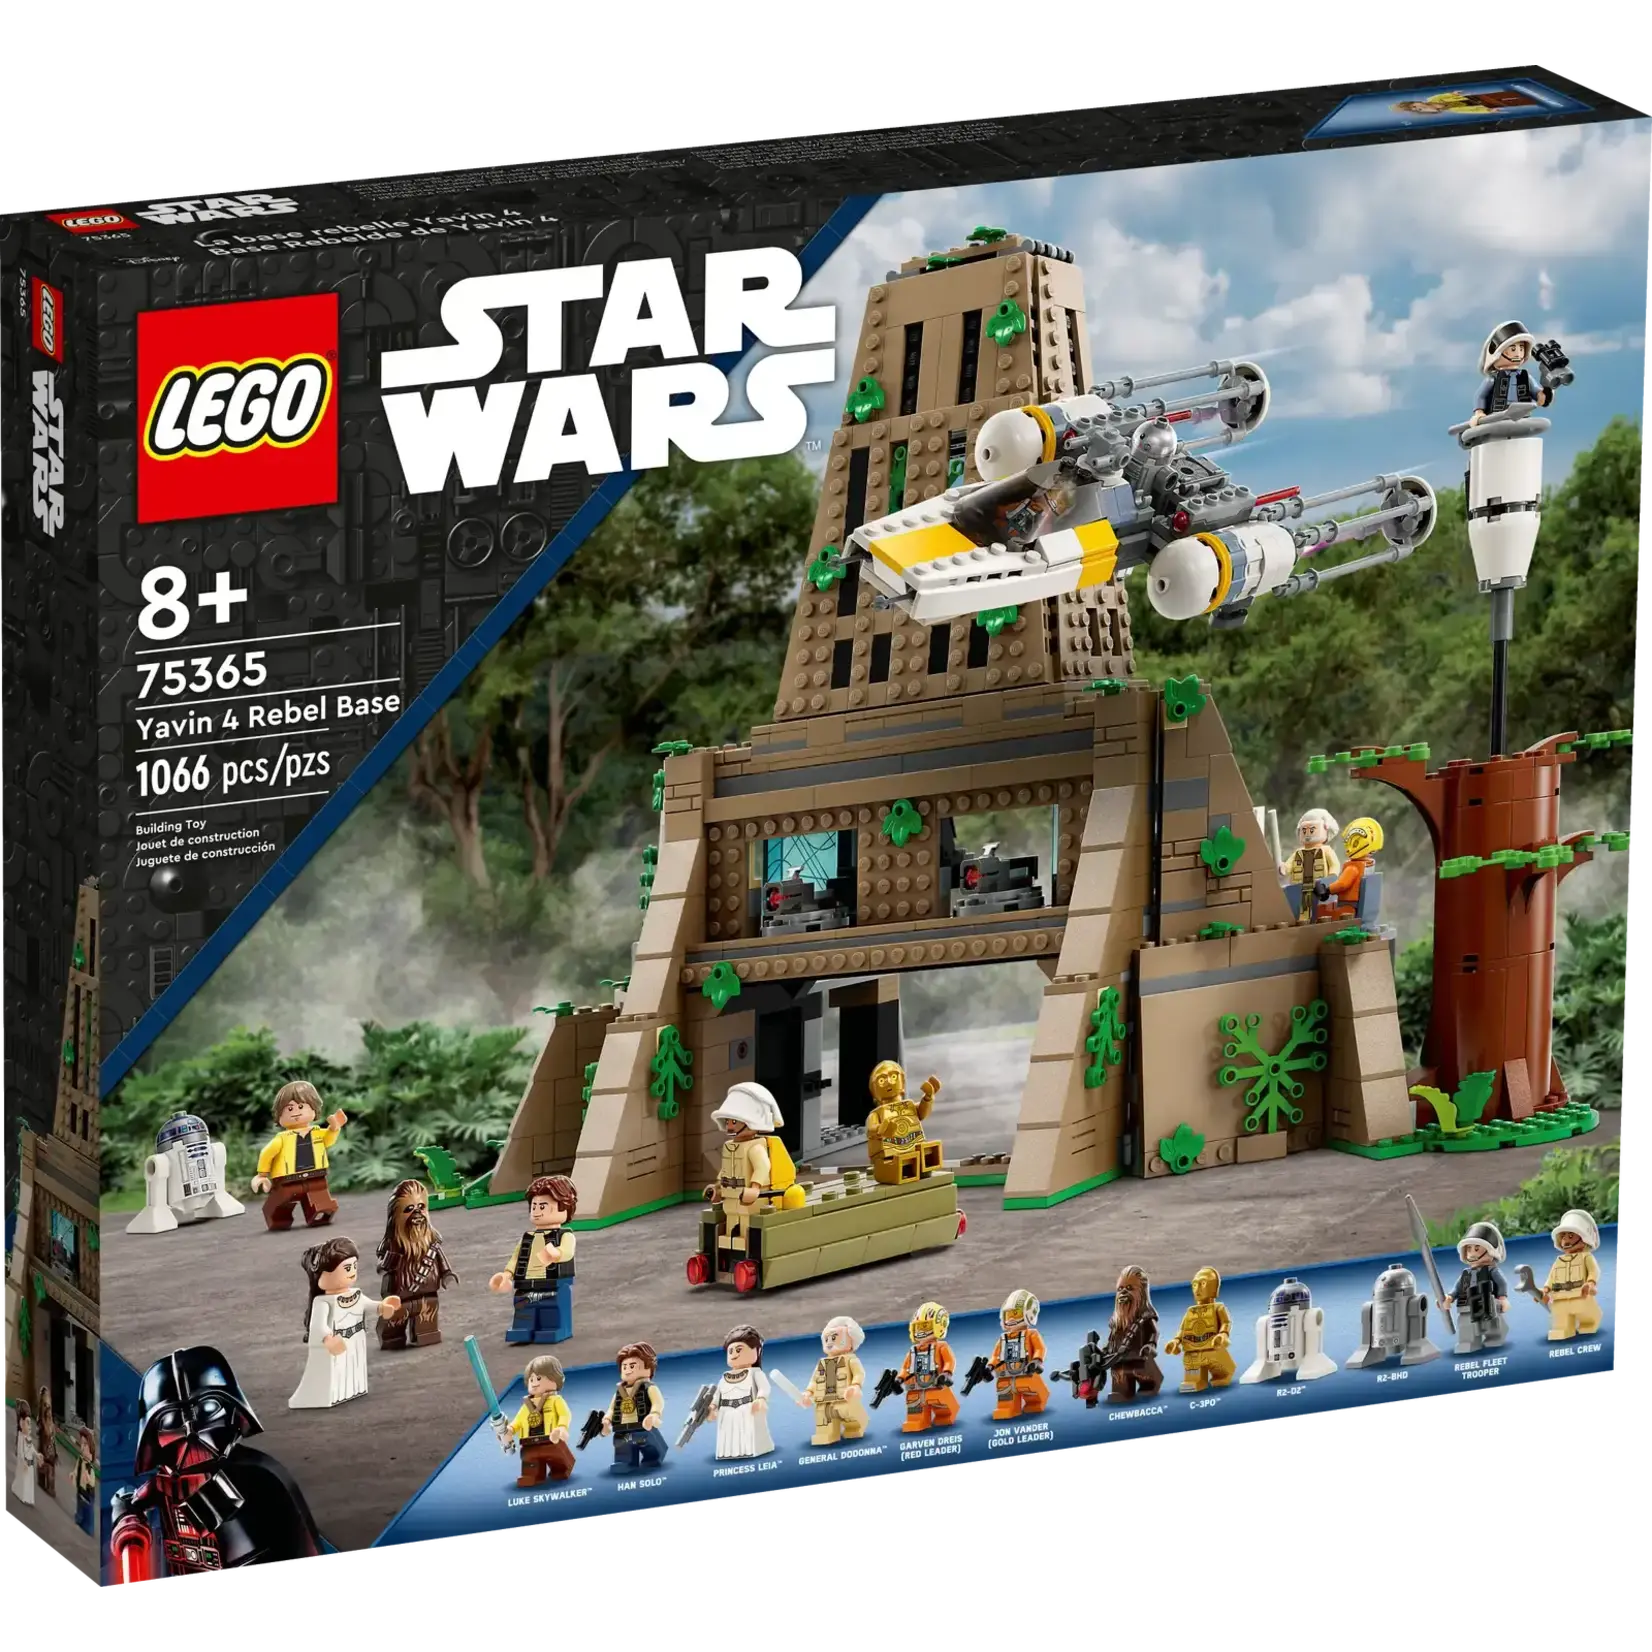 LEGO LEGO Star Wars Yavin 4 Rebel Base (75365)